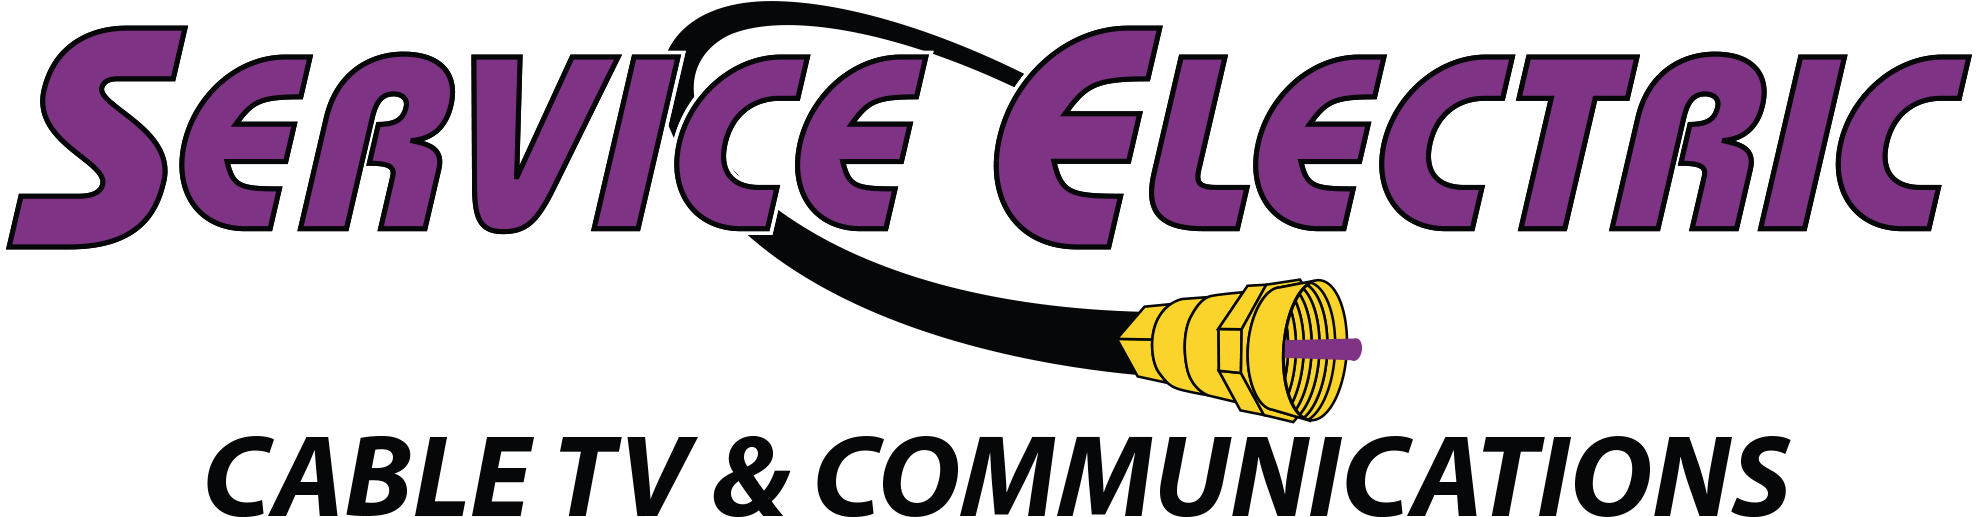 Service Electric Logo (2250x568)